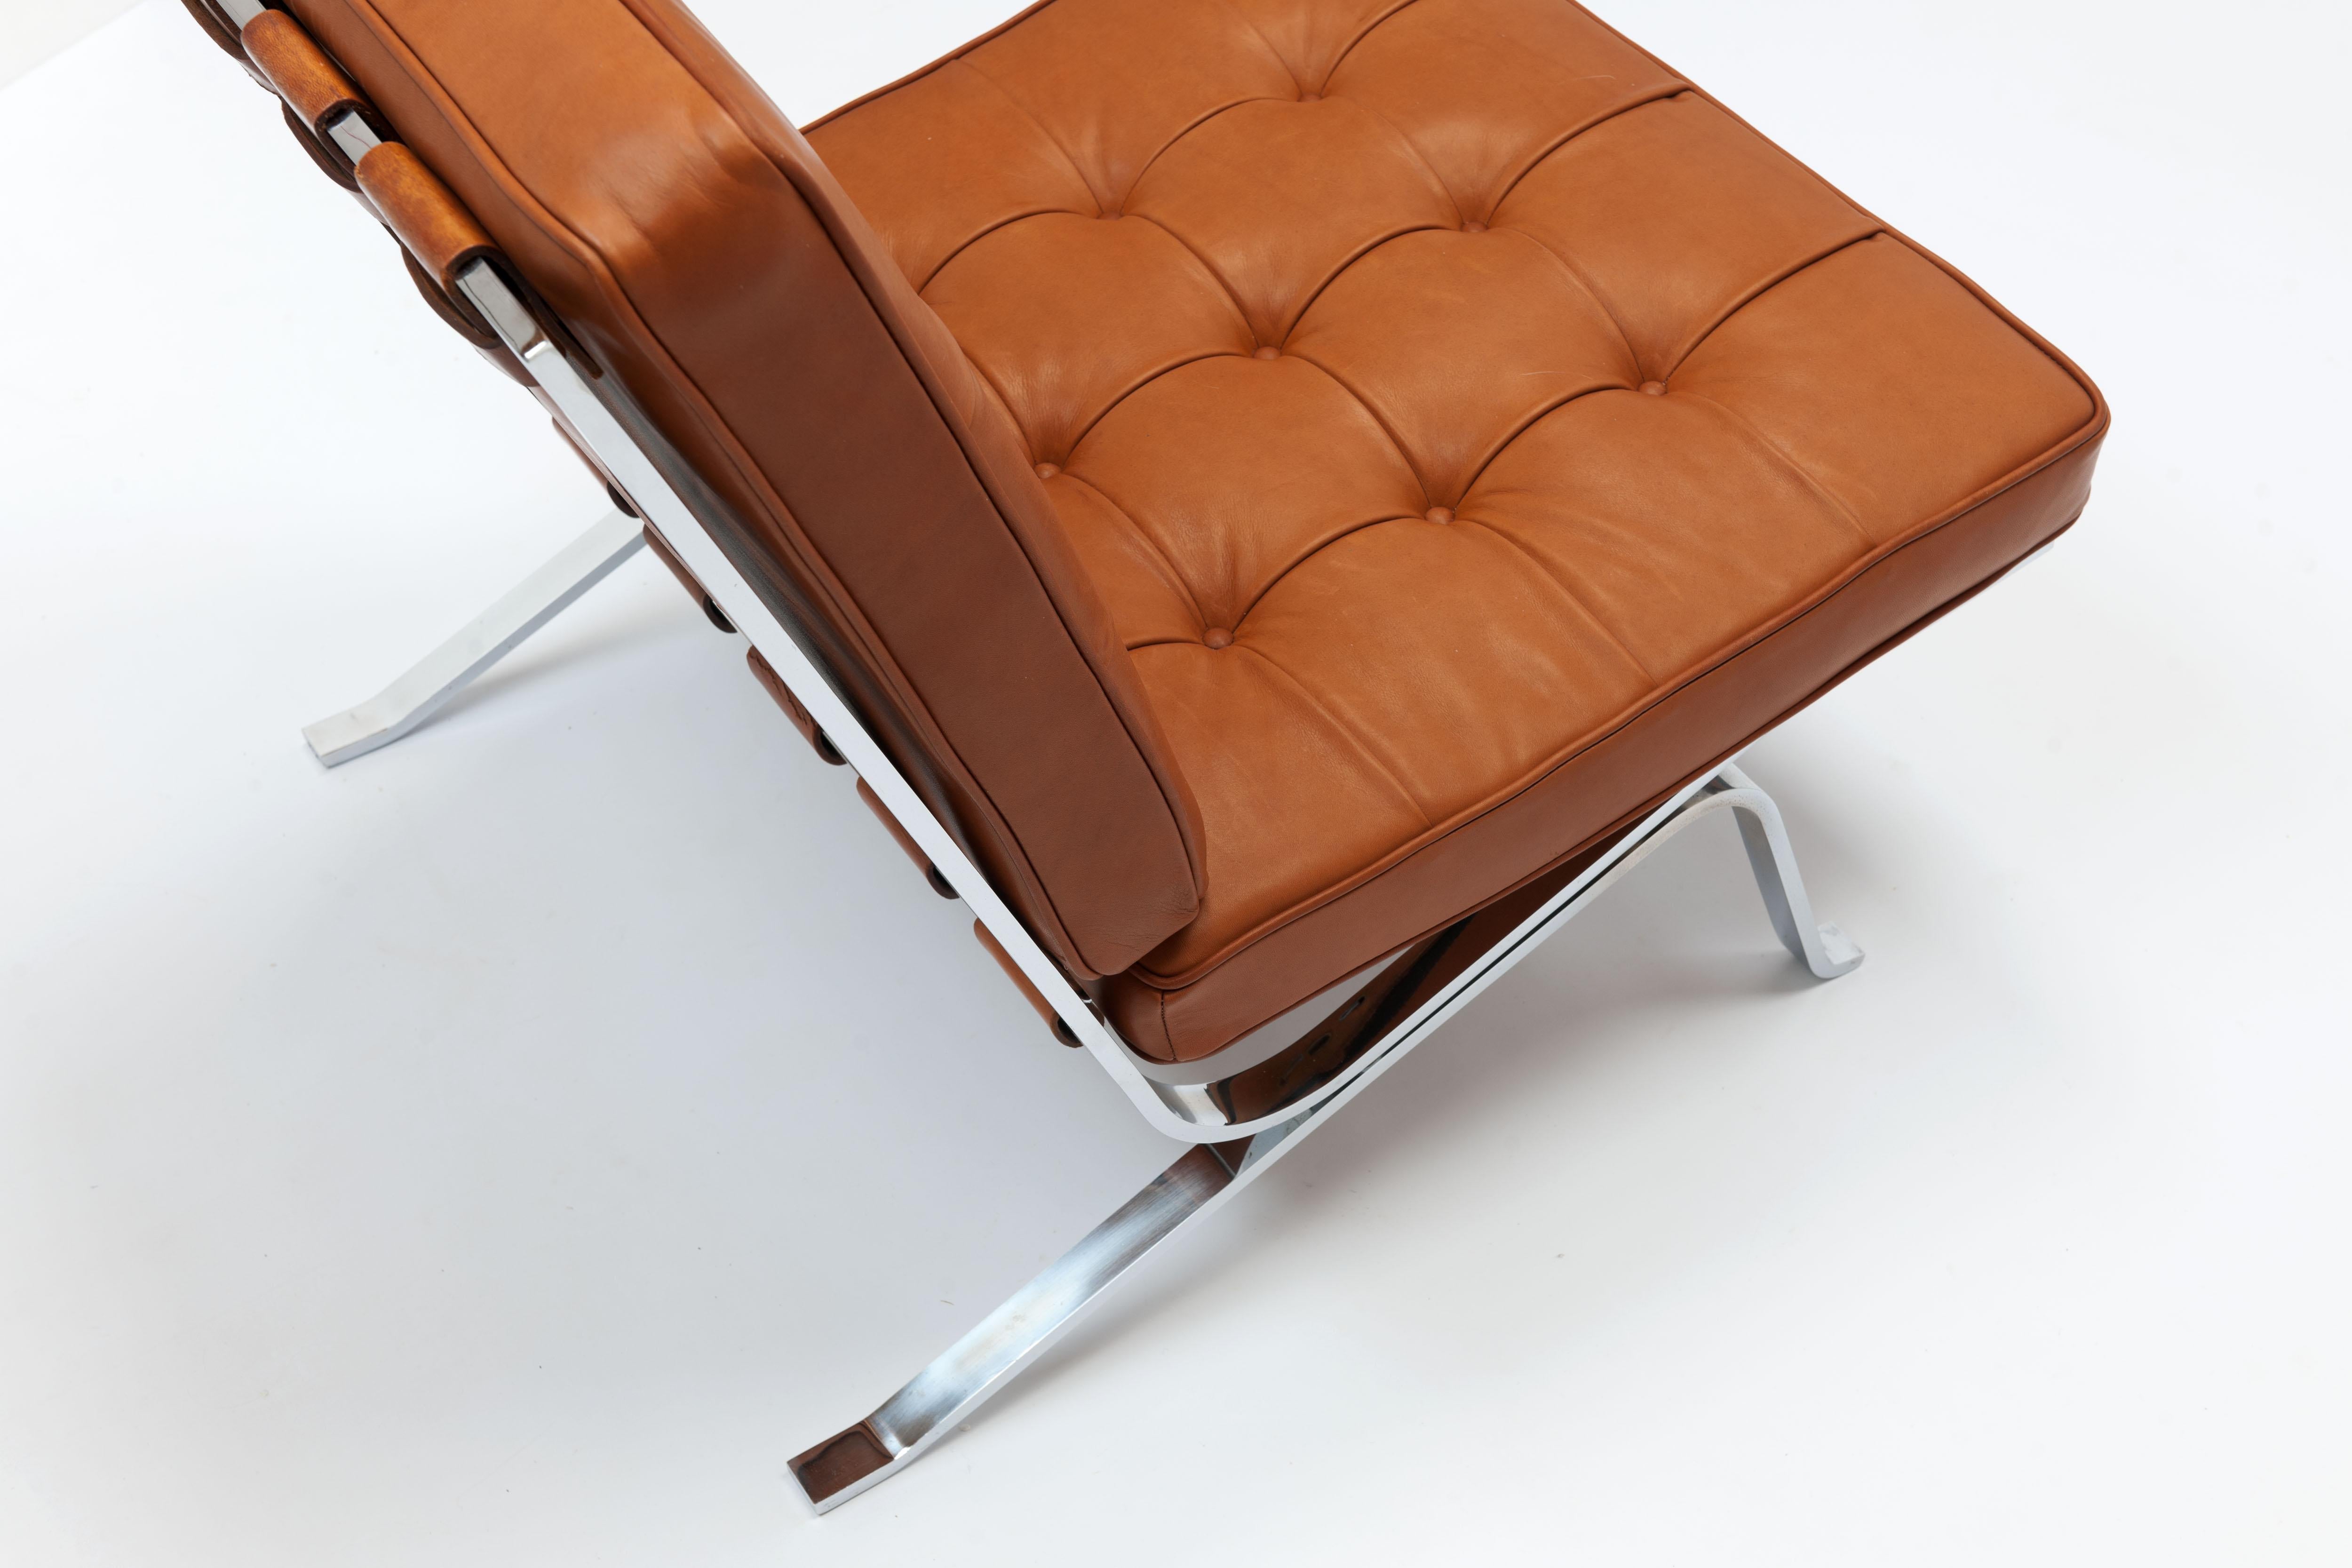 Polychromed Cognac Leather RH301 Lounge Chair by Robert Haussmann (Pair Available)